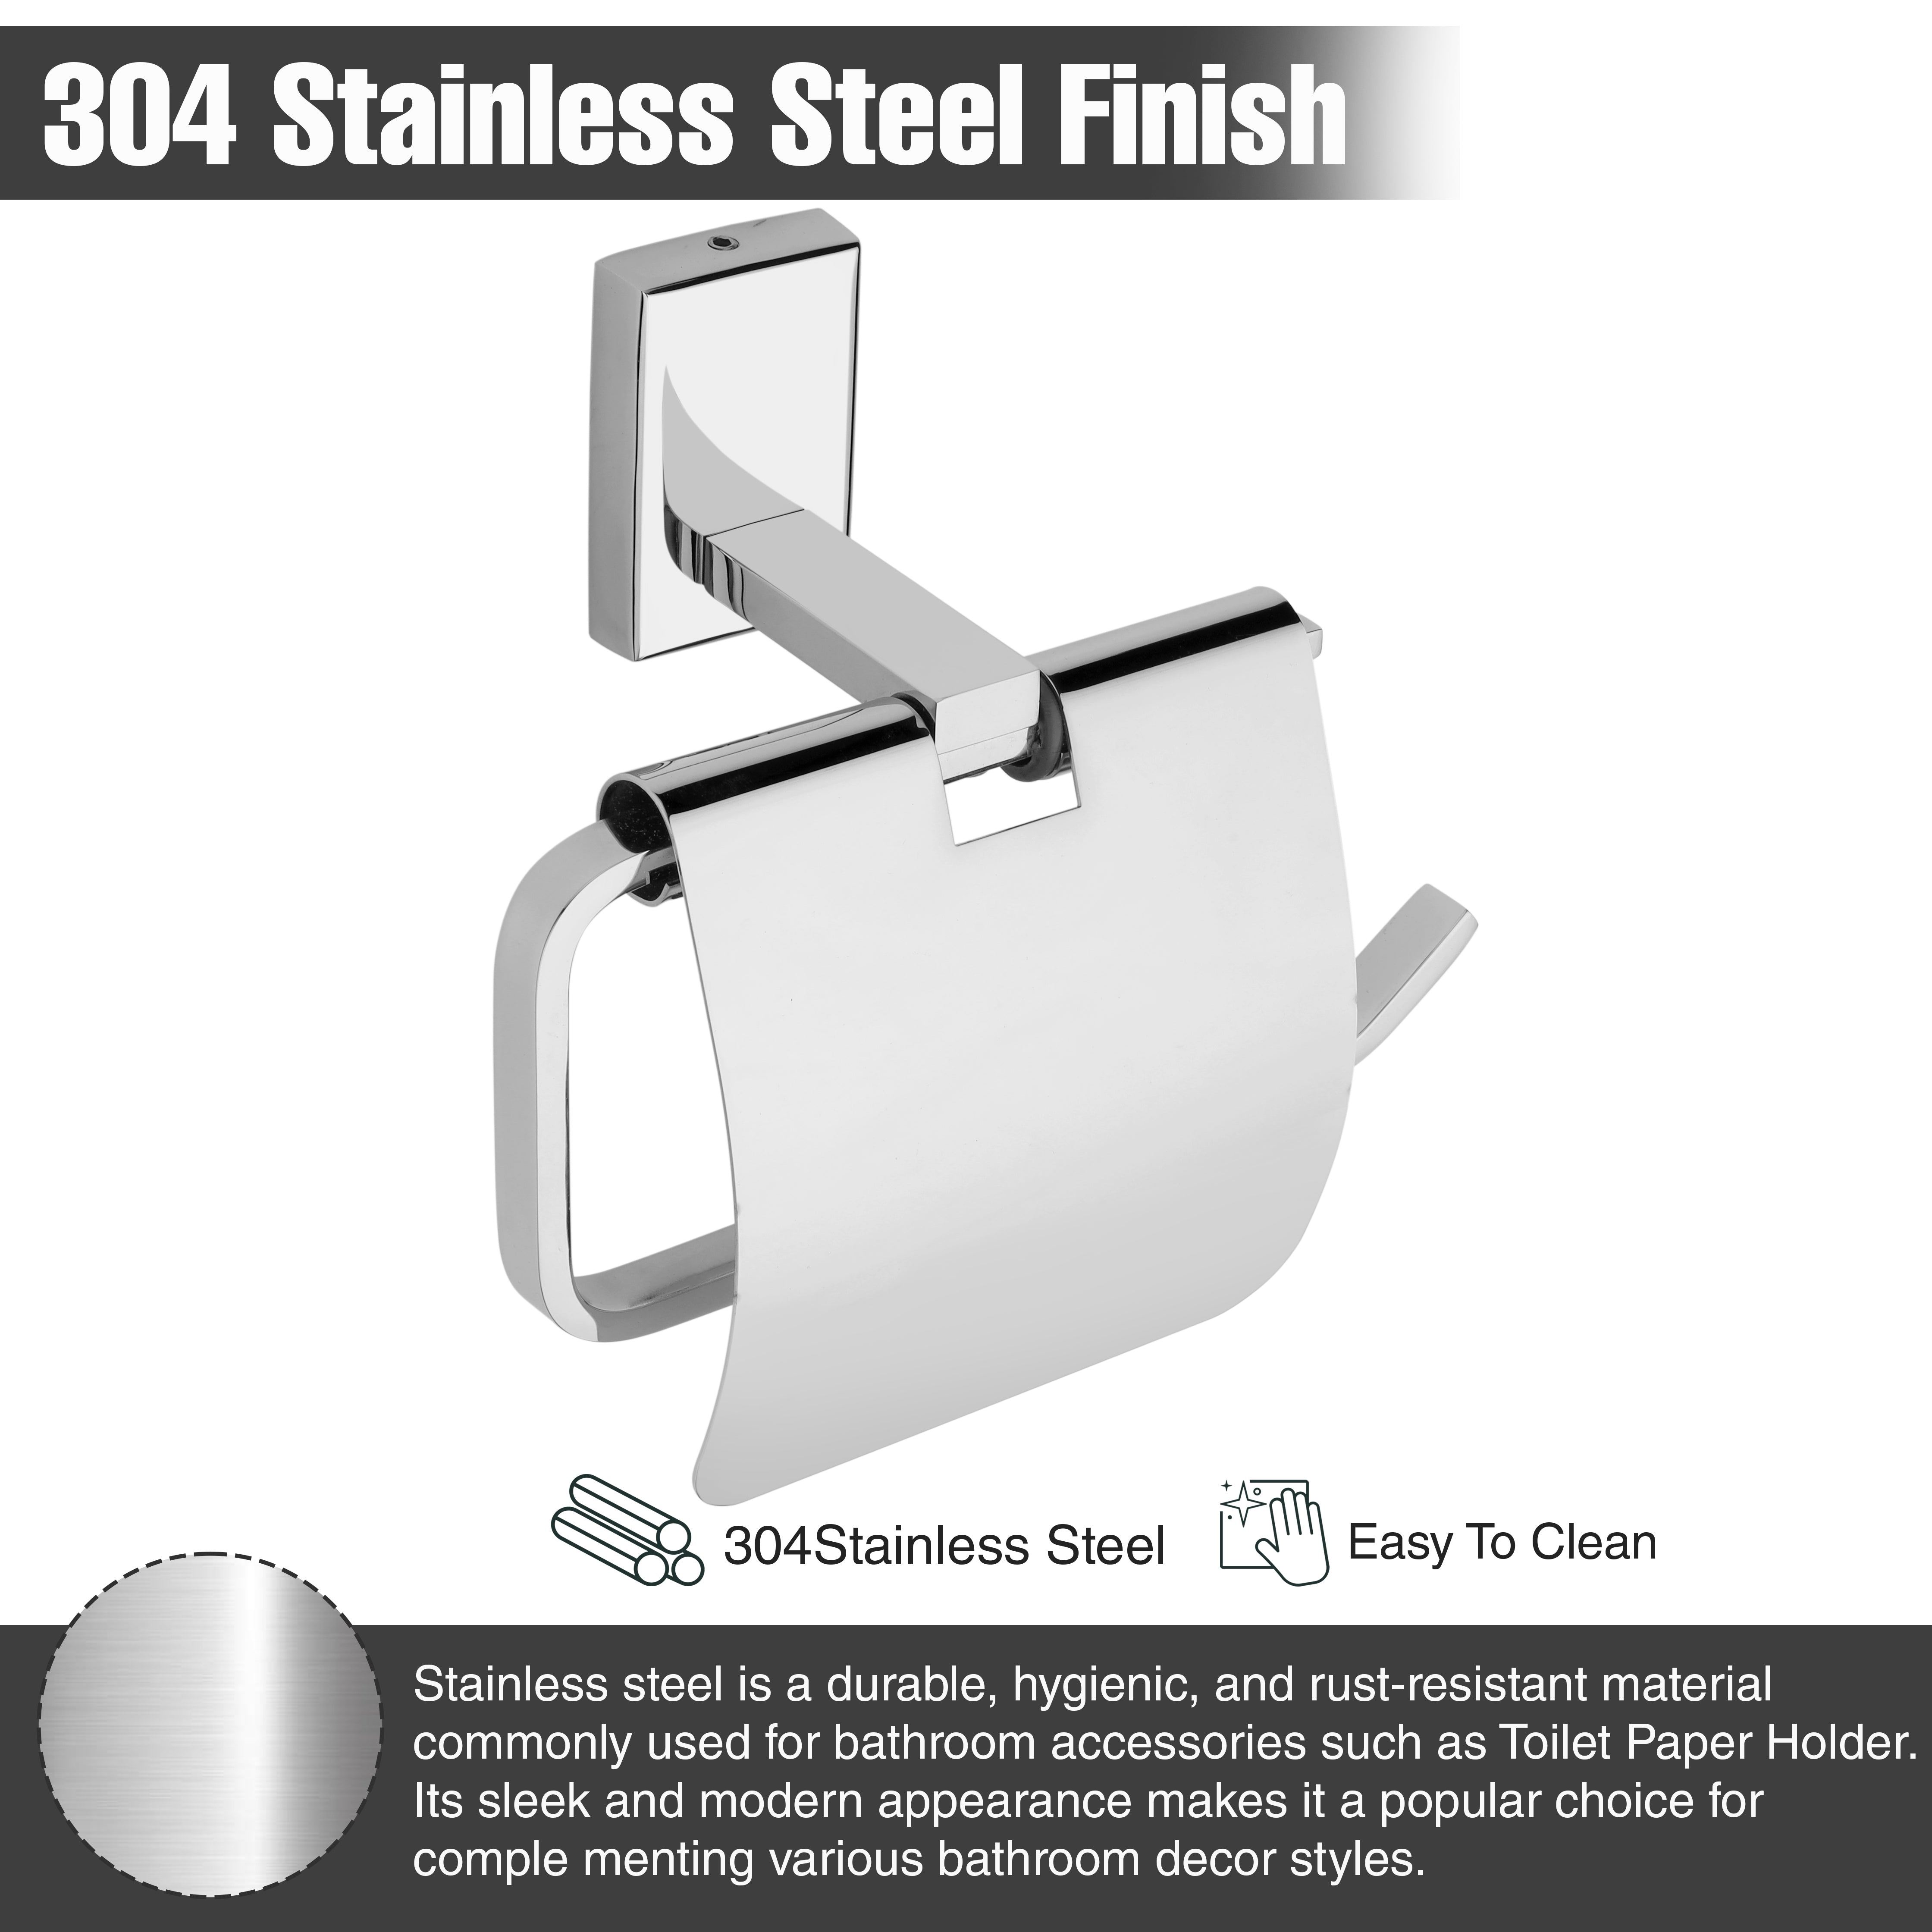 Stainless Steel Silver Toilet Paper Holder Tissue Roll